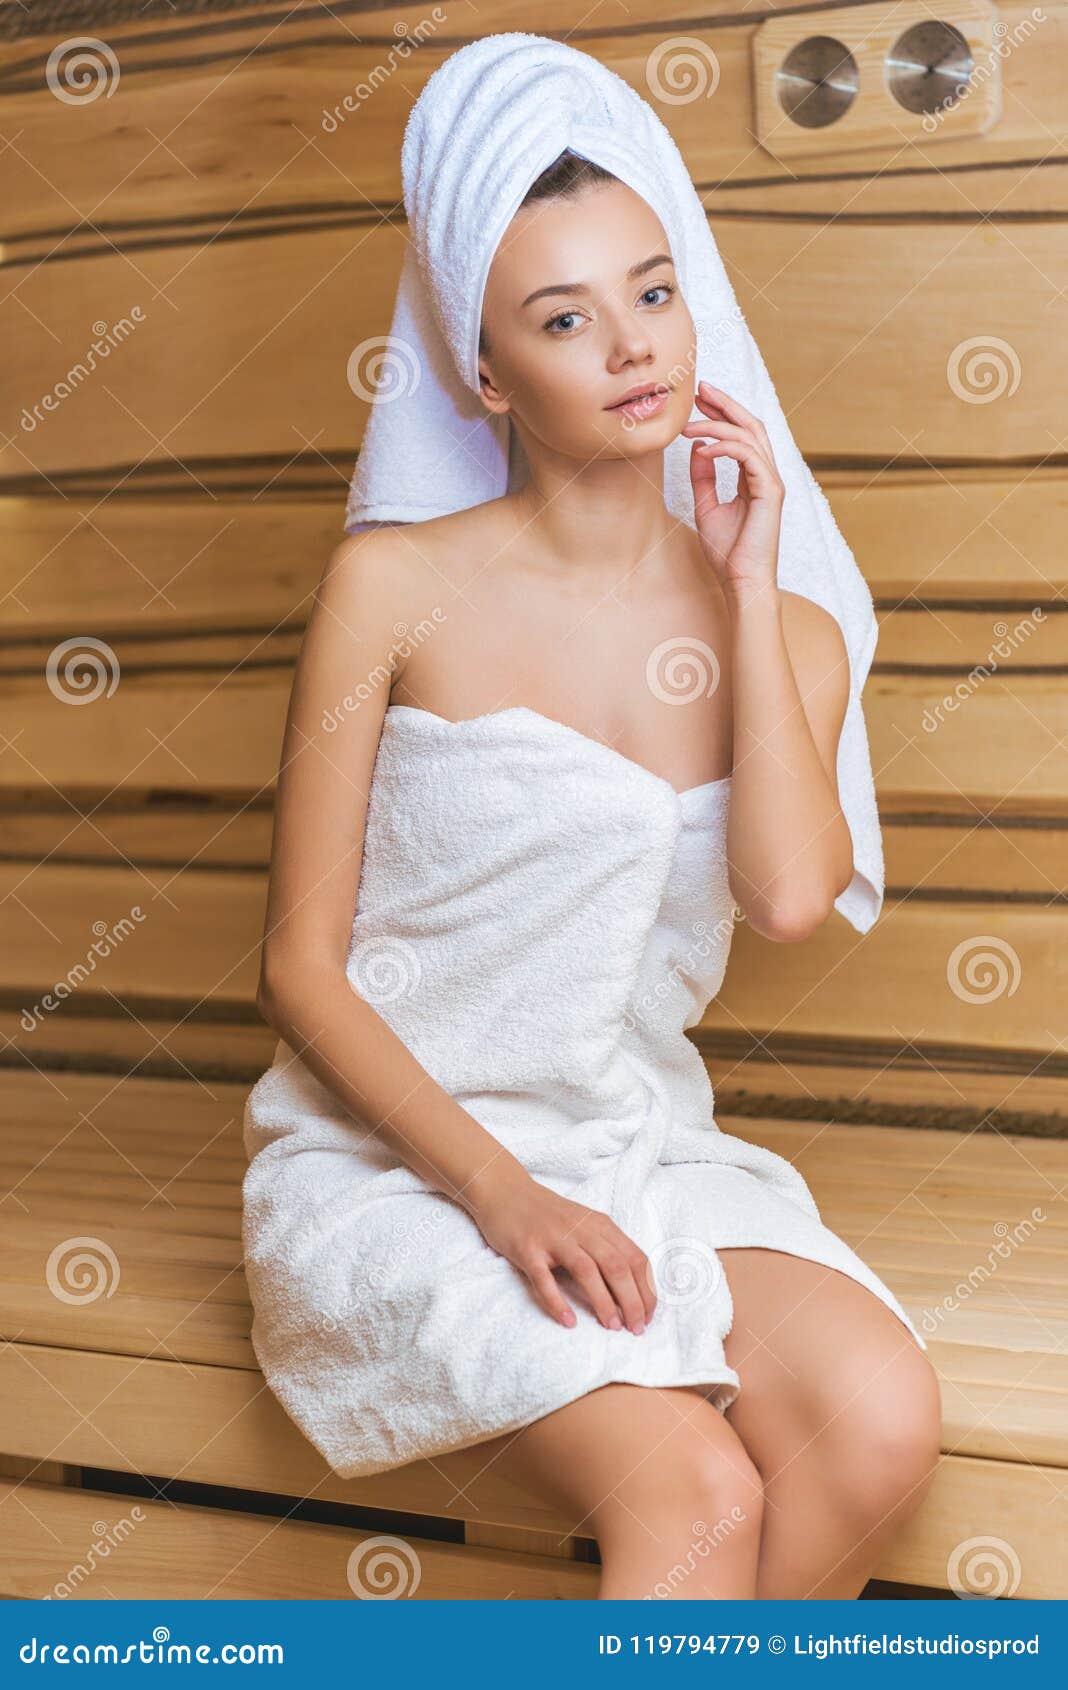 Работа в полотенце. Девушка в полотенце. Девушка в бананом пплаьенце. Девушка в бане в полотенце. Фотосессия полотенце девушка.